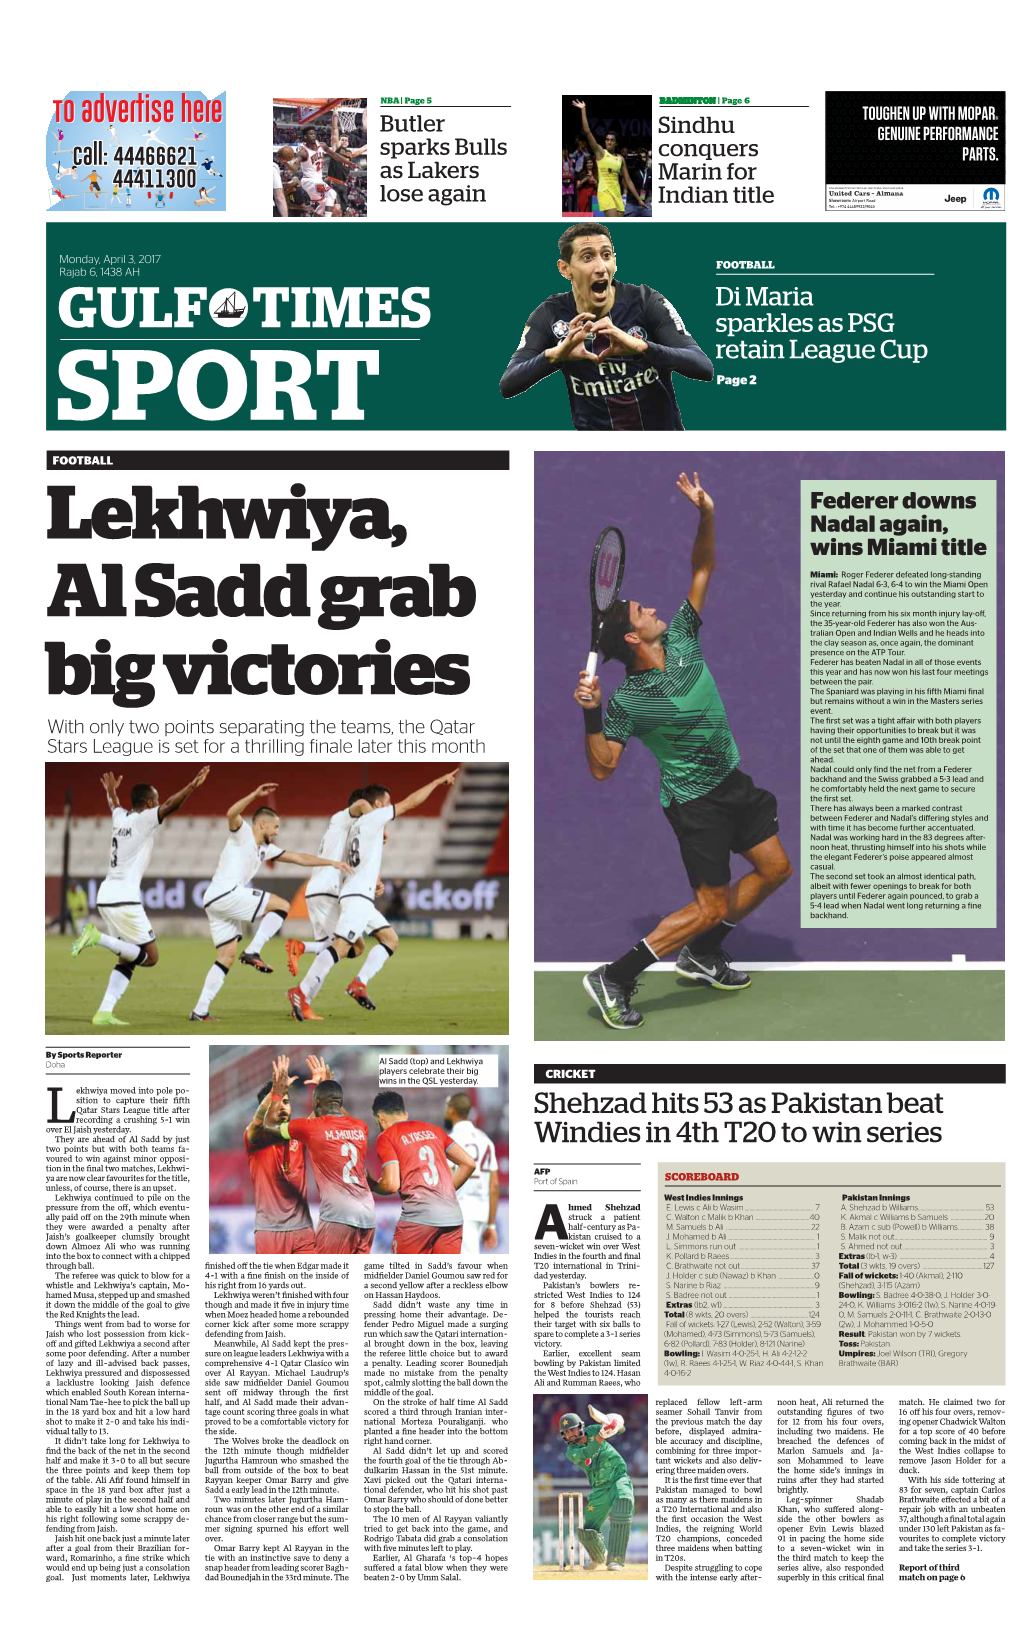 Lekhwiya, Al Sadd Grab Big Victories